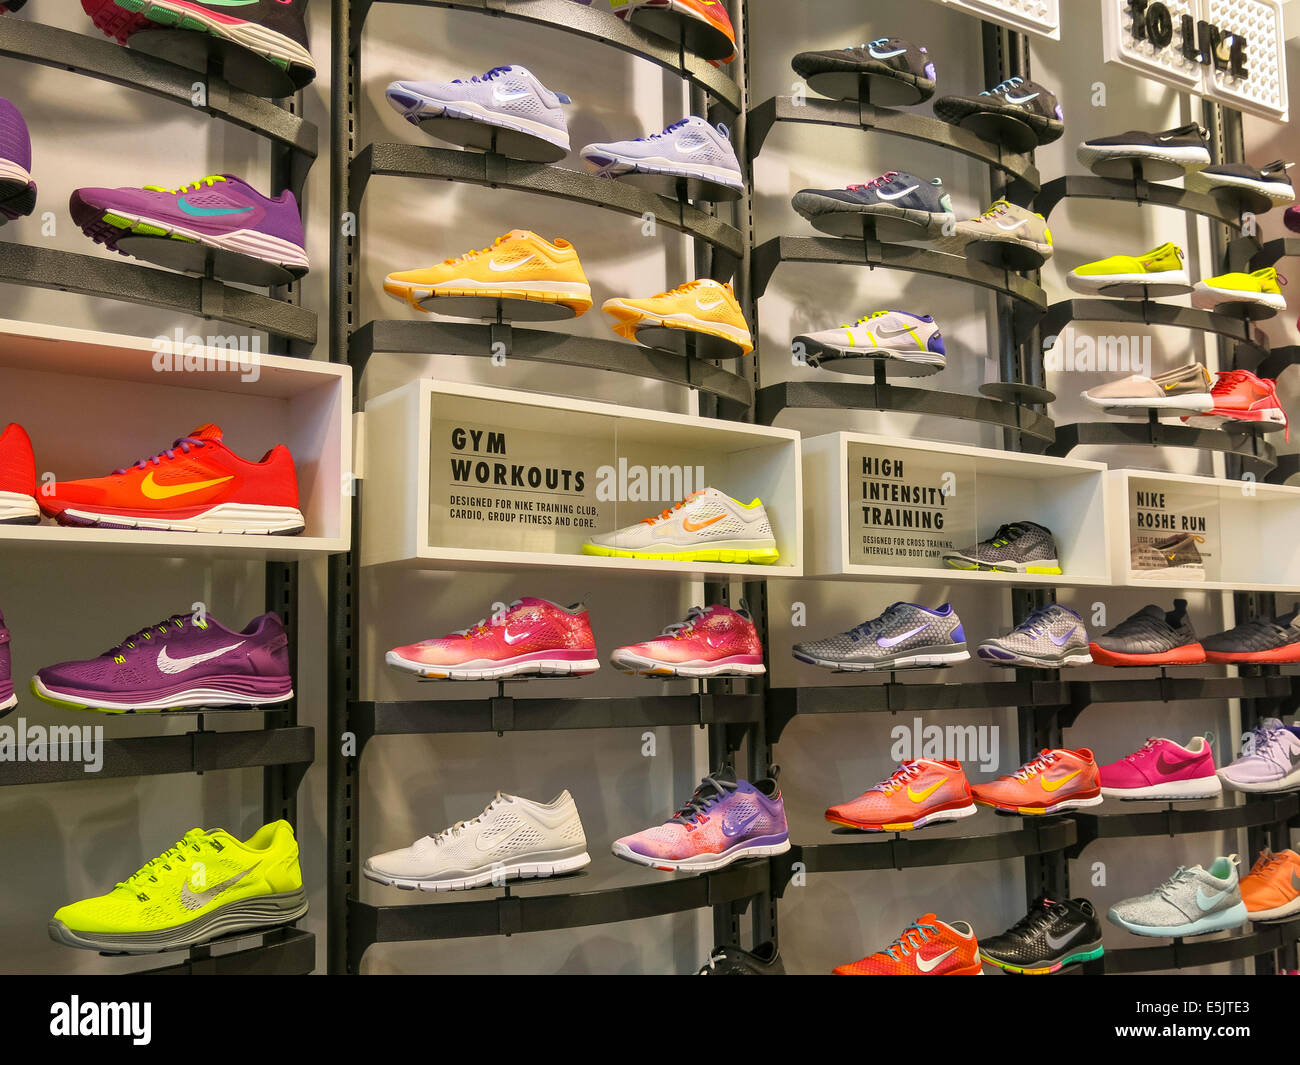 shoes display e imágenes de alta resolución - Alamy